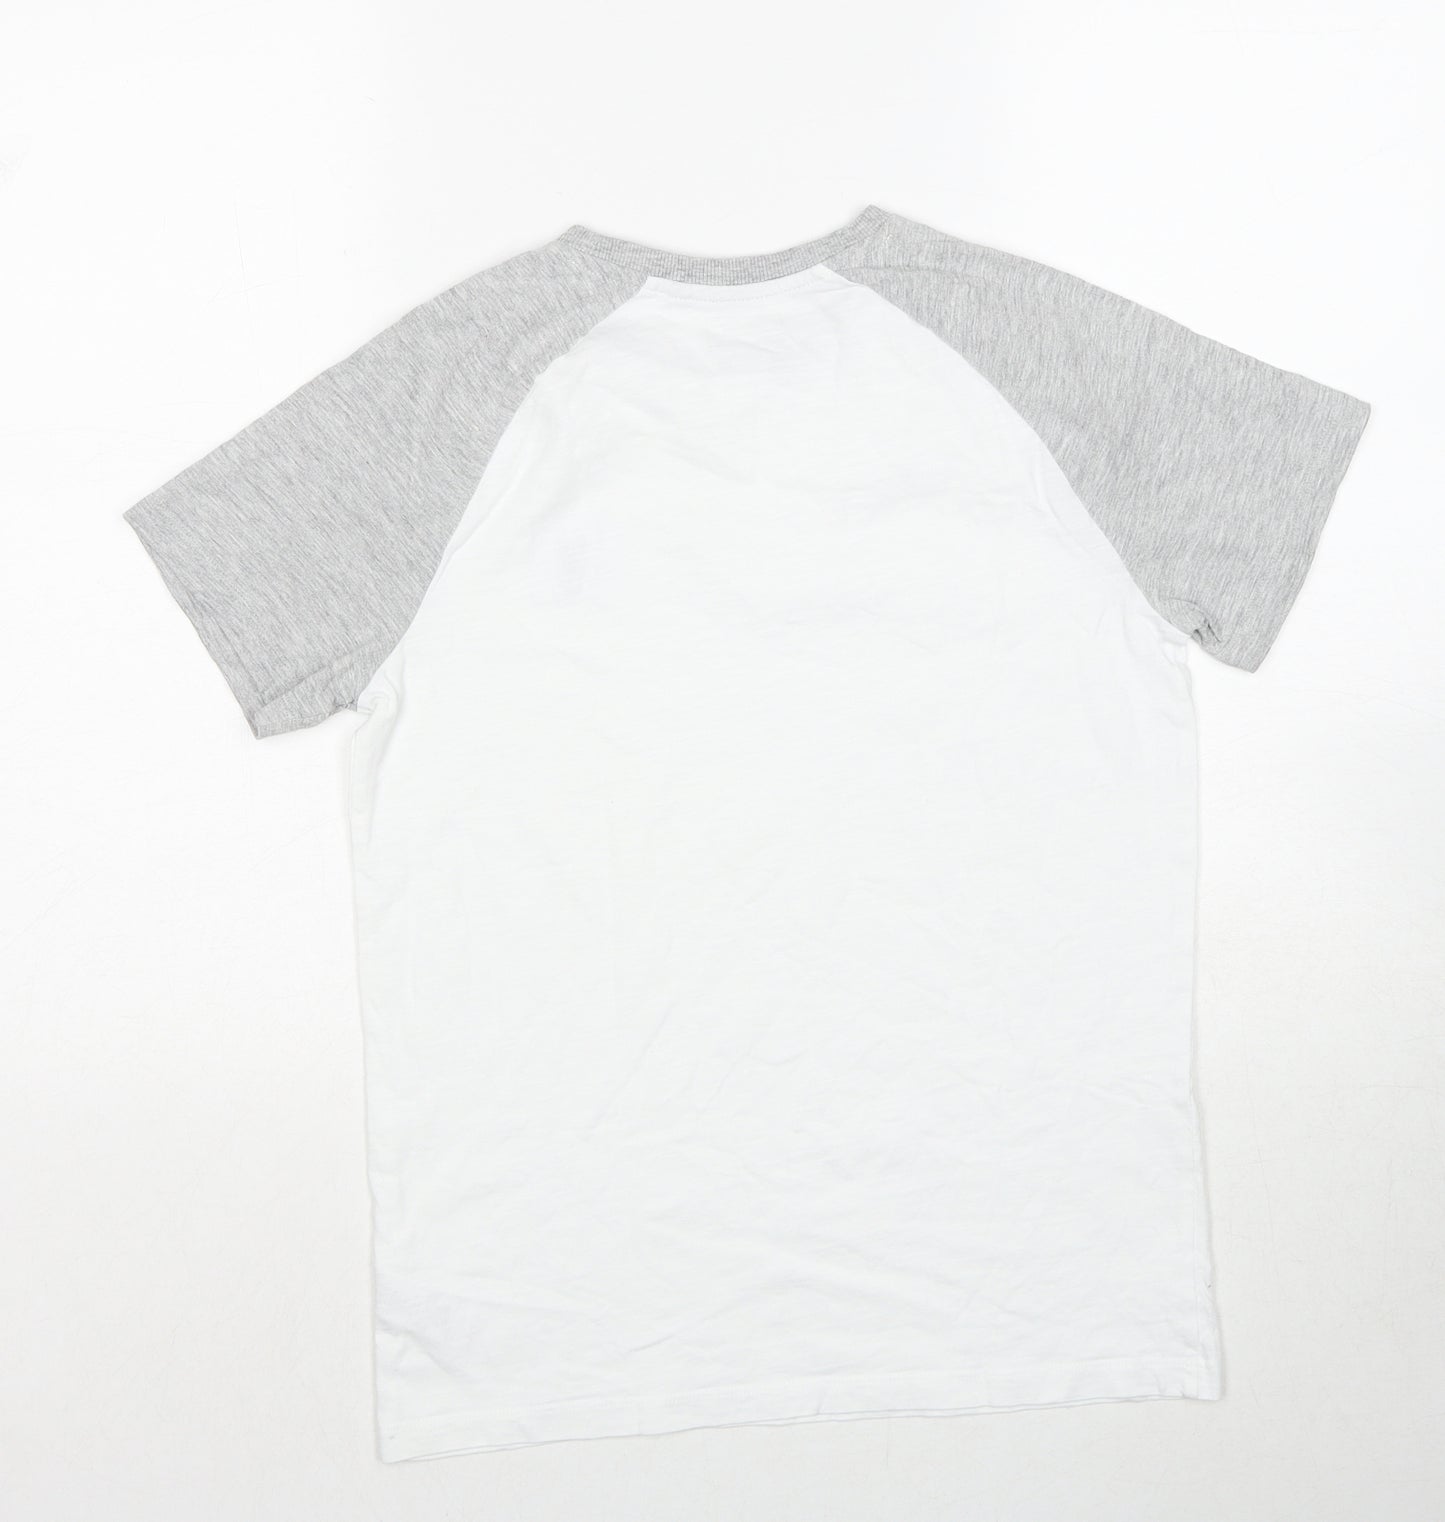 NEXT Boys White Colourblock Cotton Basic T-Shirt Size 13 Years Round Neck Pullover